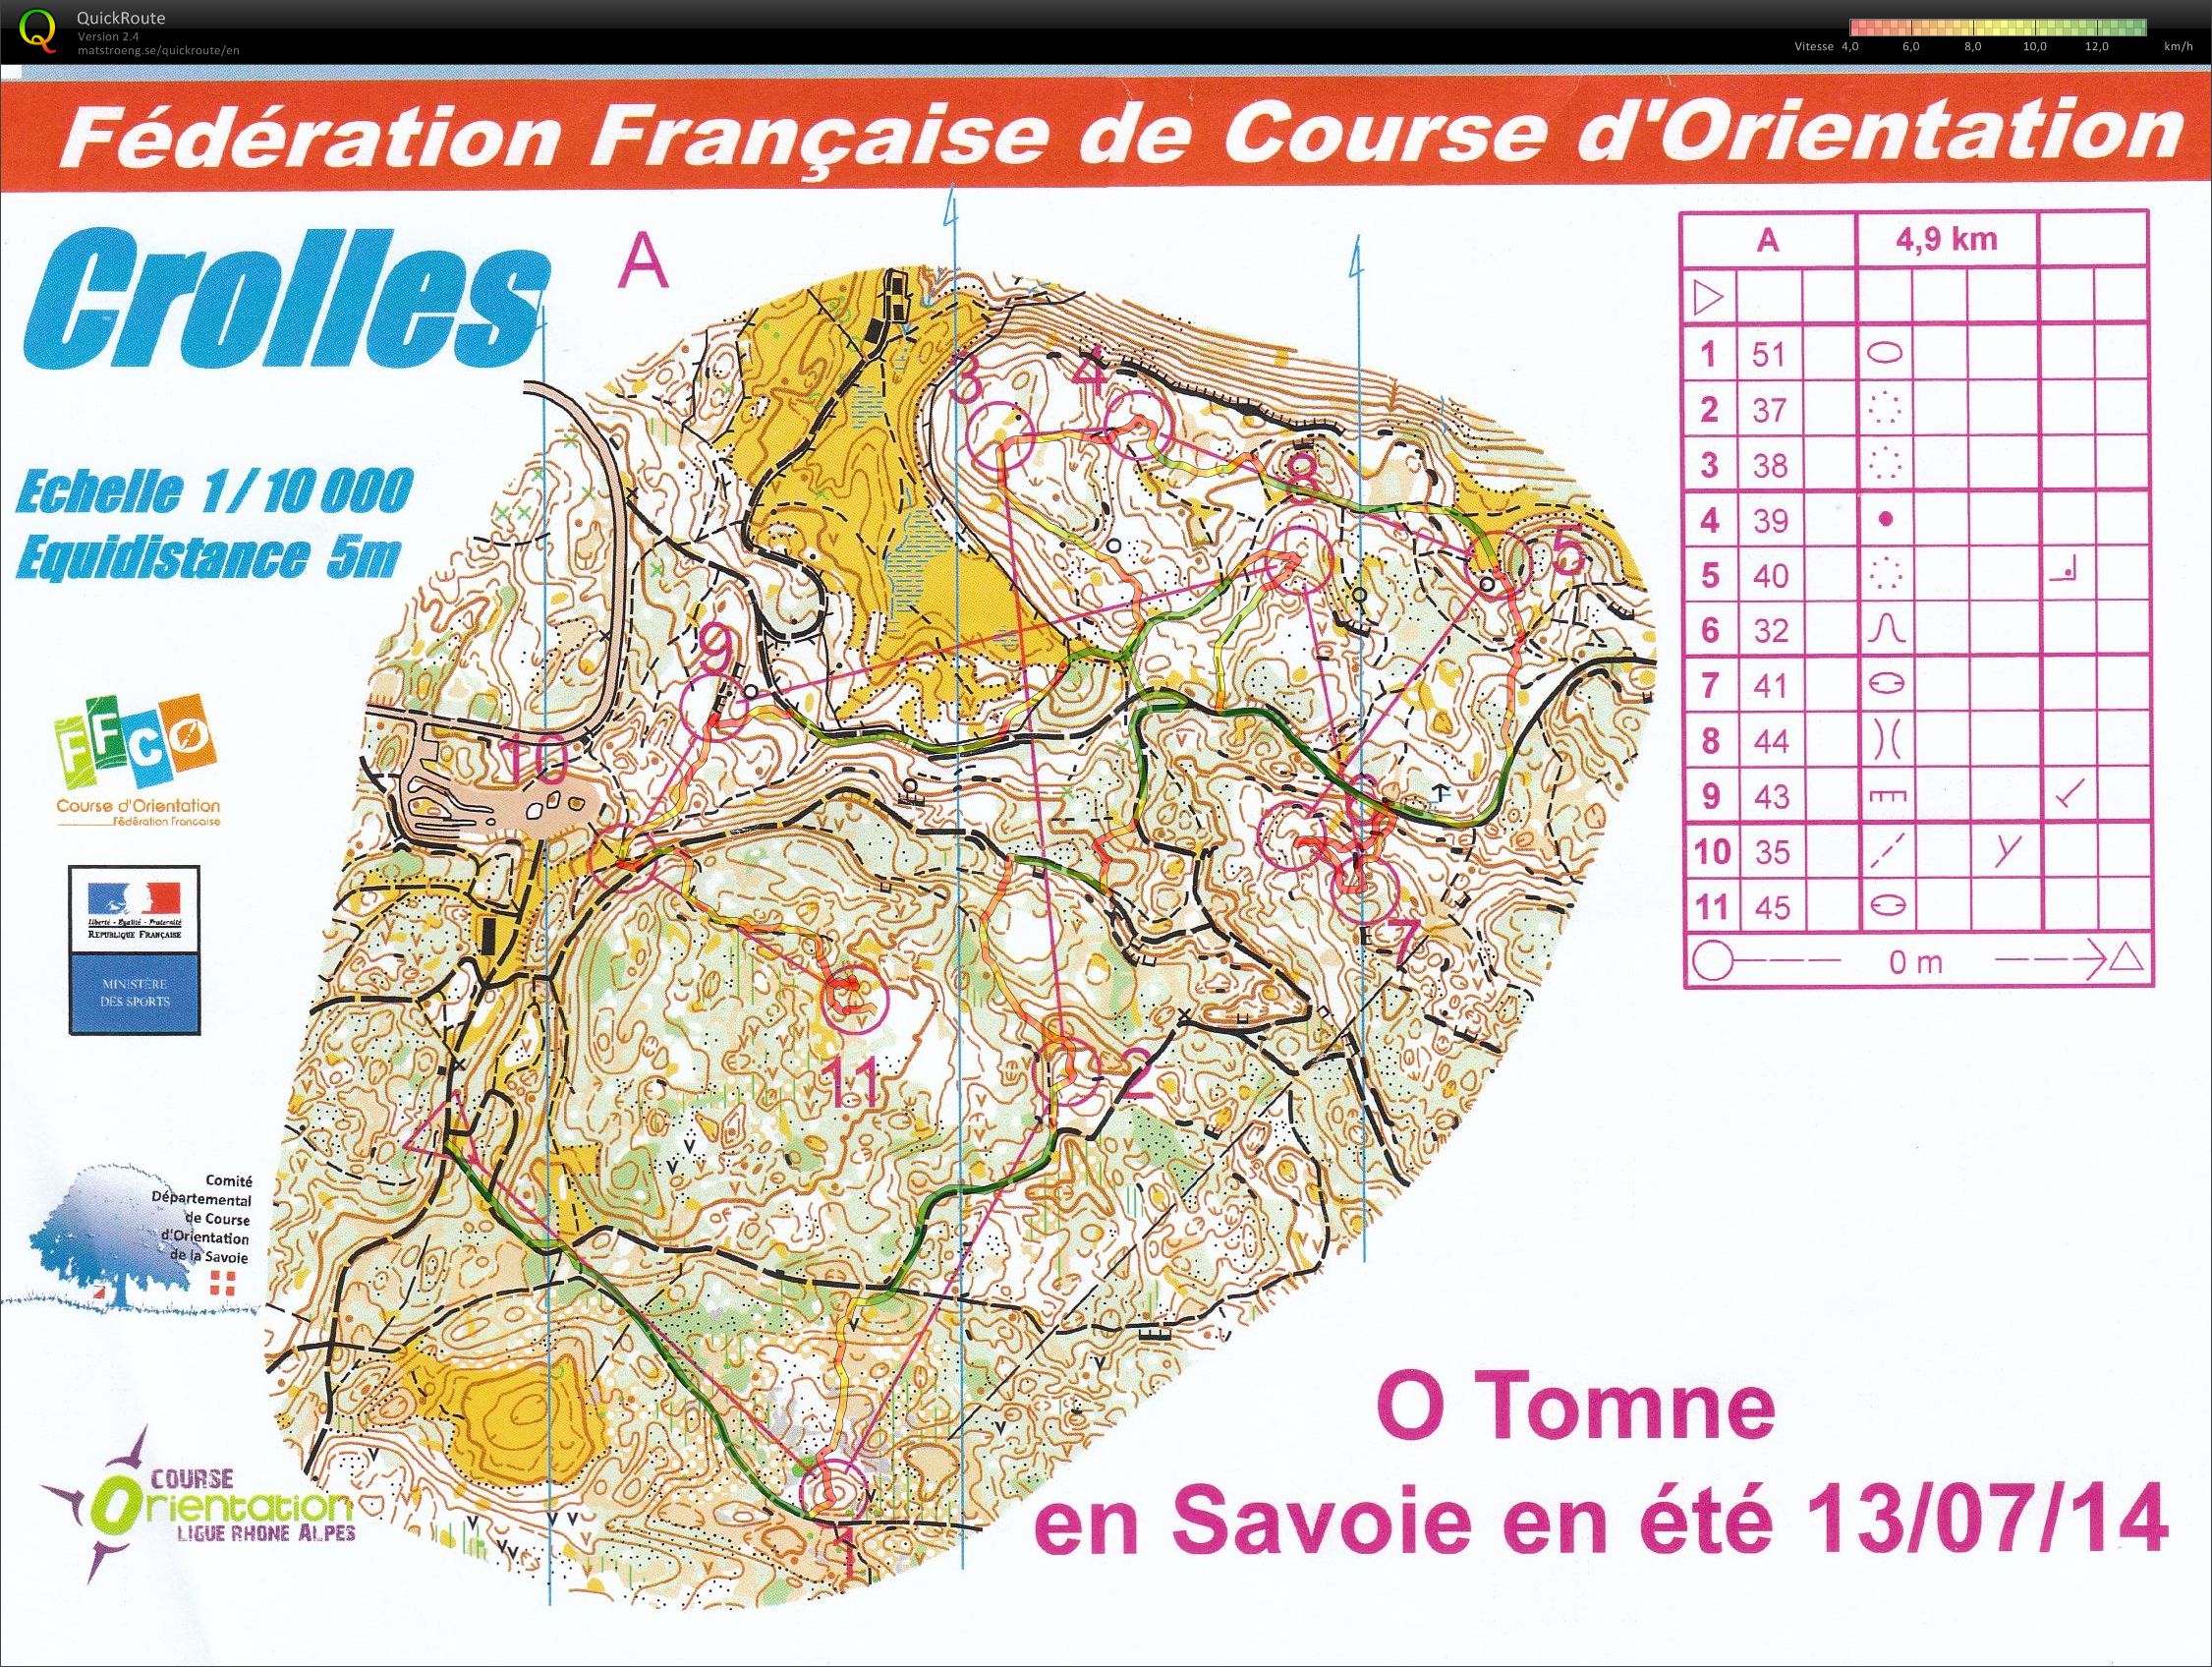 O'Tomne en Savoie Etape 4 (1/2) (13/07/2014)